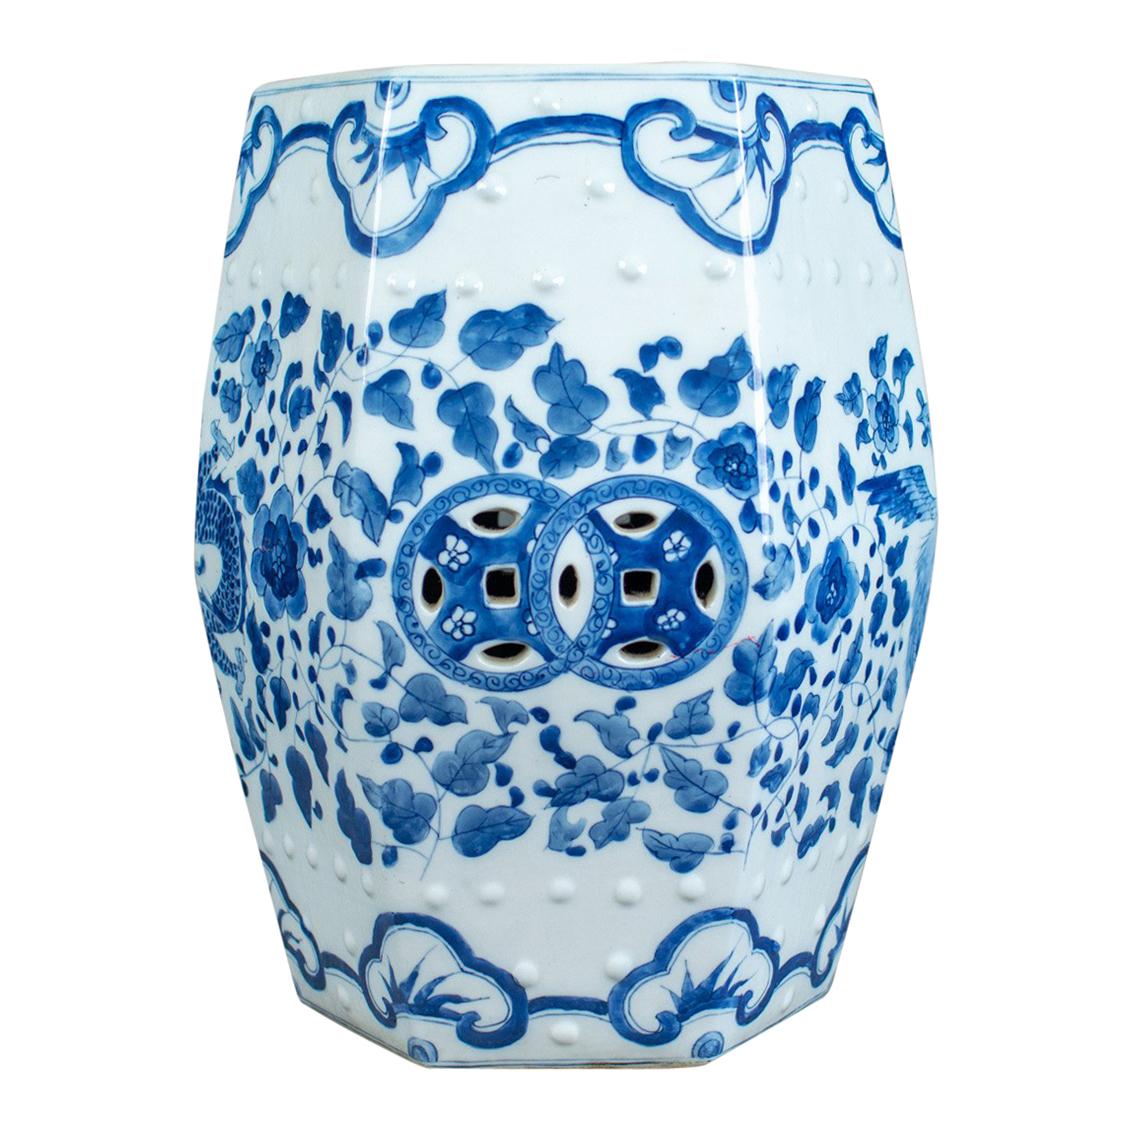 Ceramic Garden Stool, Chinese, Blue & White, Seat, Plant Stand, 20th Century